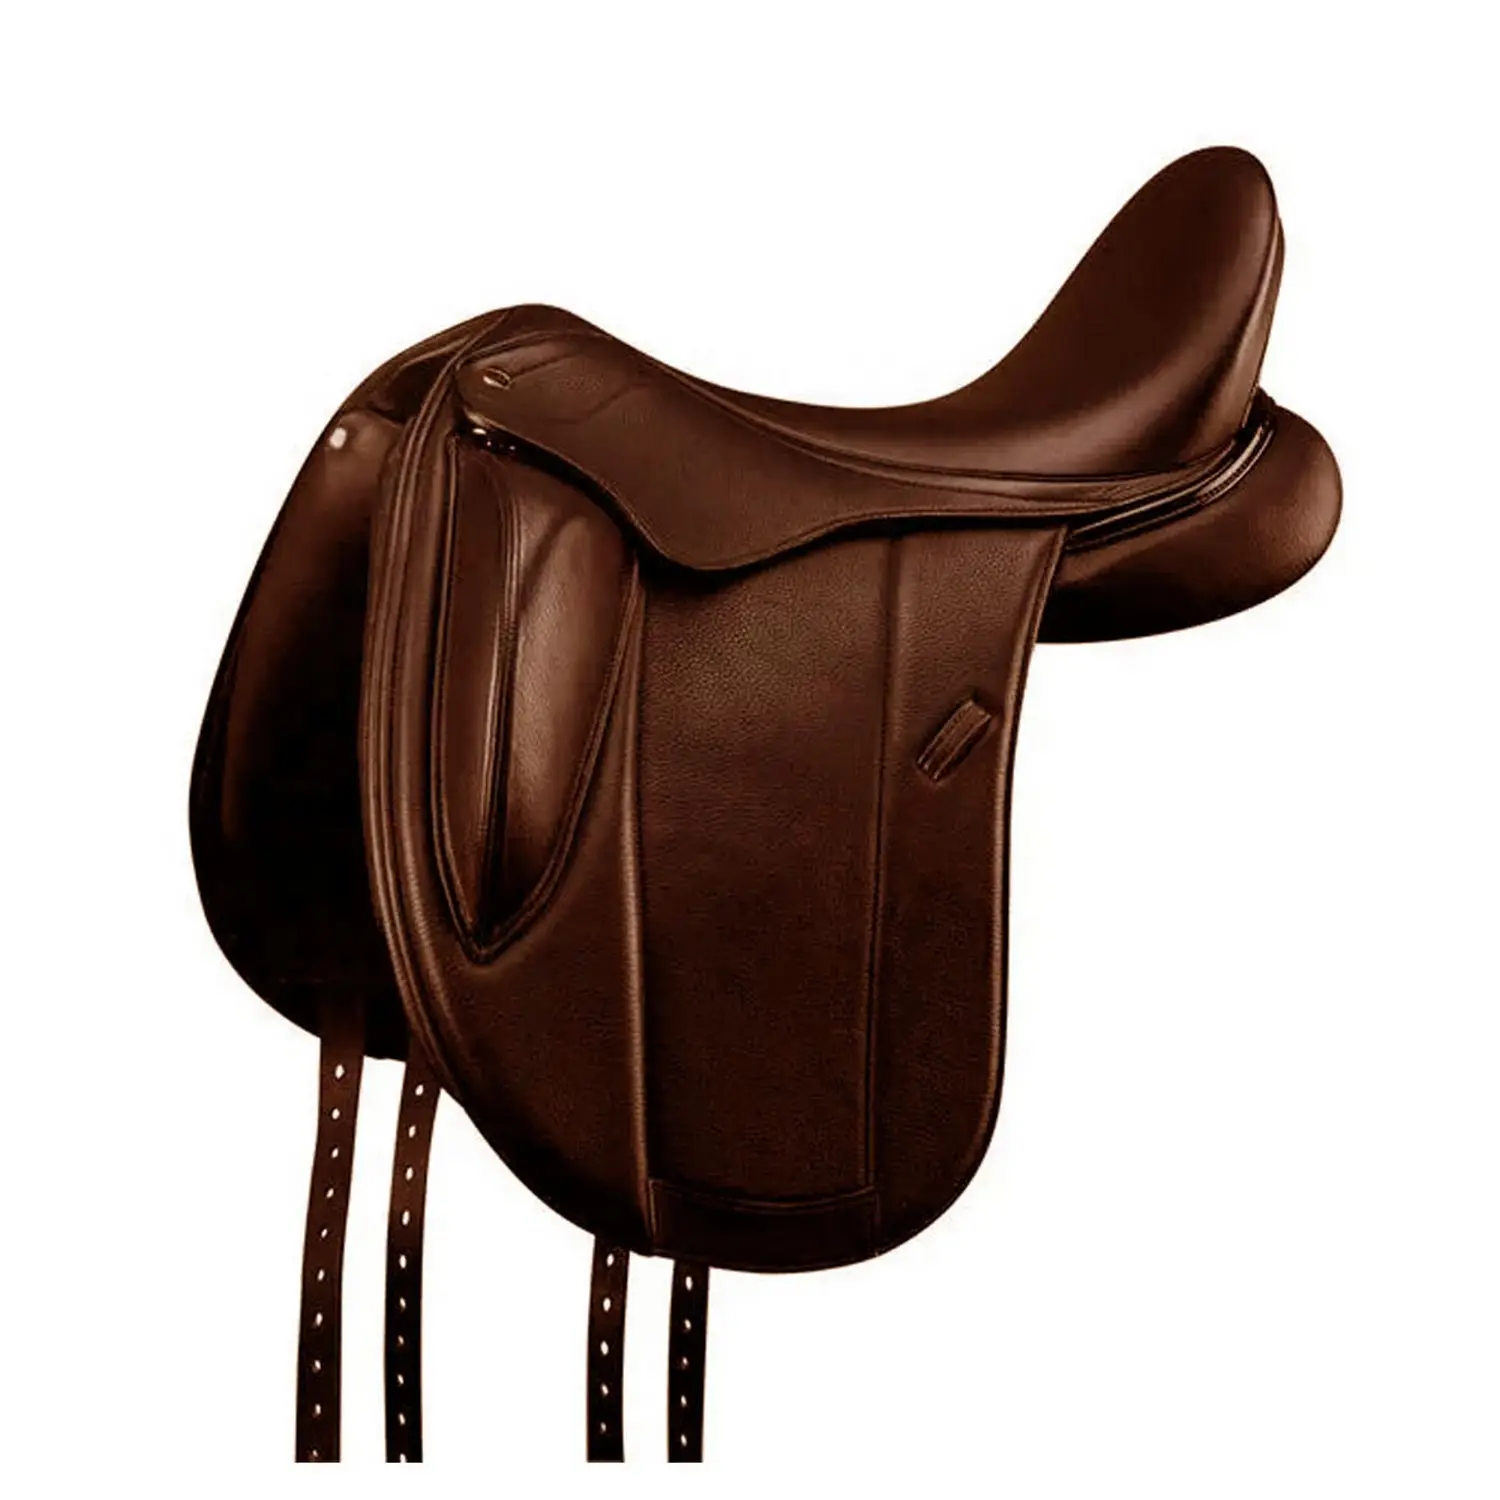 Sadel kulit asli Inggris Barat sadel kuda coklat kulit asli untuk berkuda olahraga luar ruangan 2023